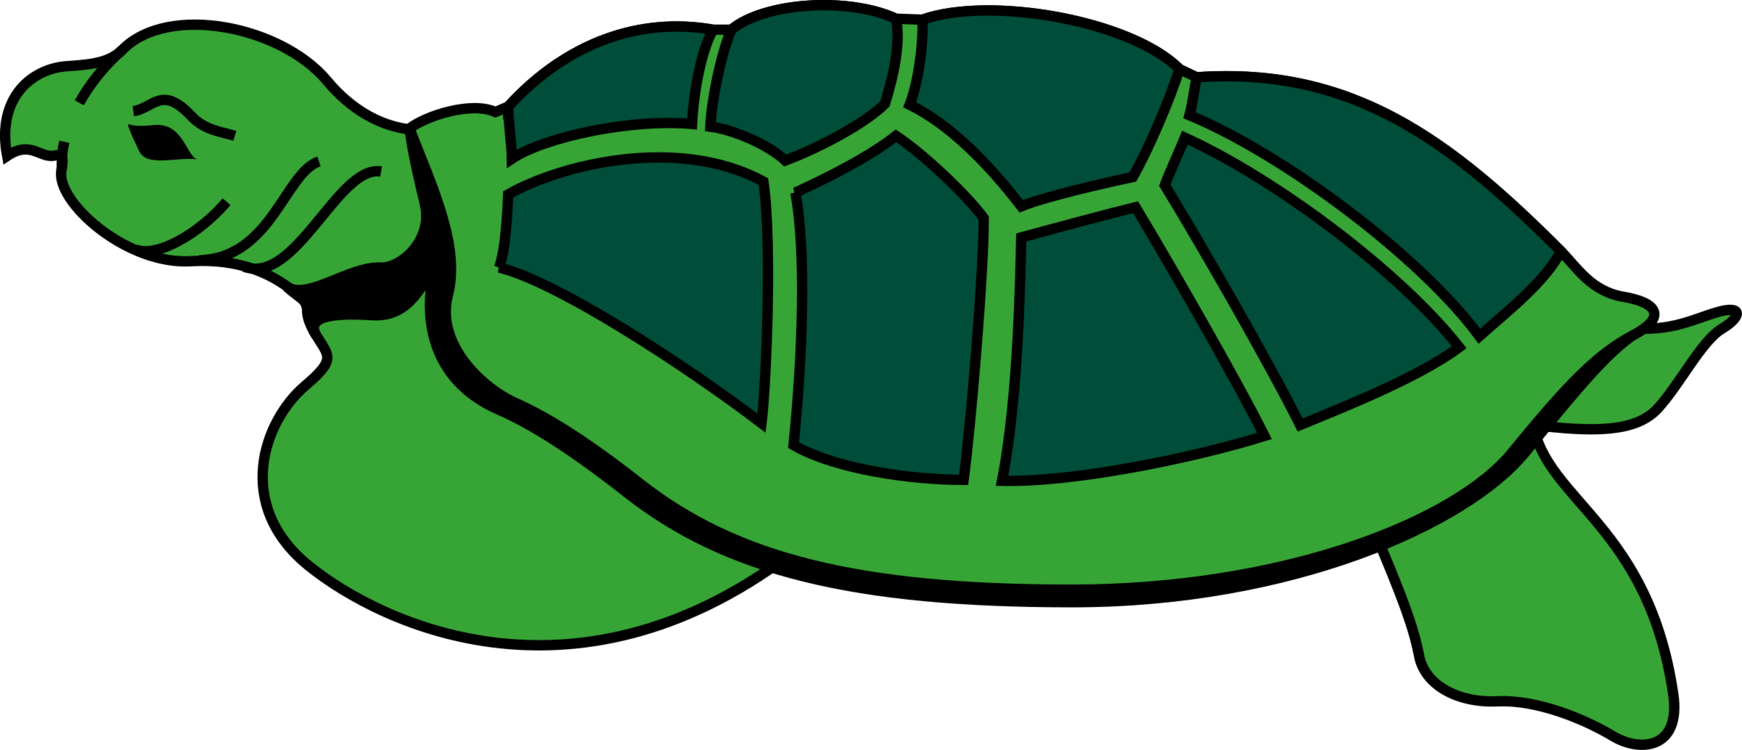 Turtle,Reptile,Leaf